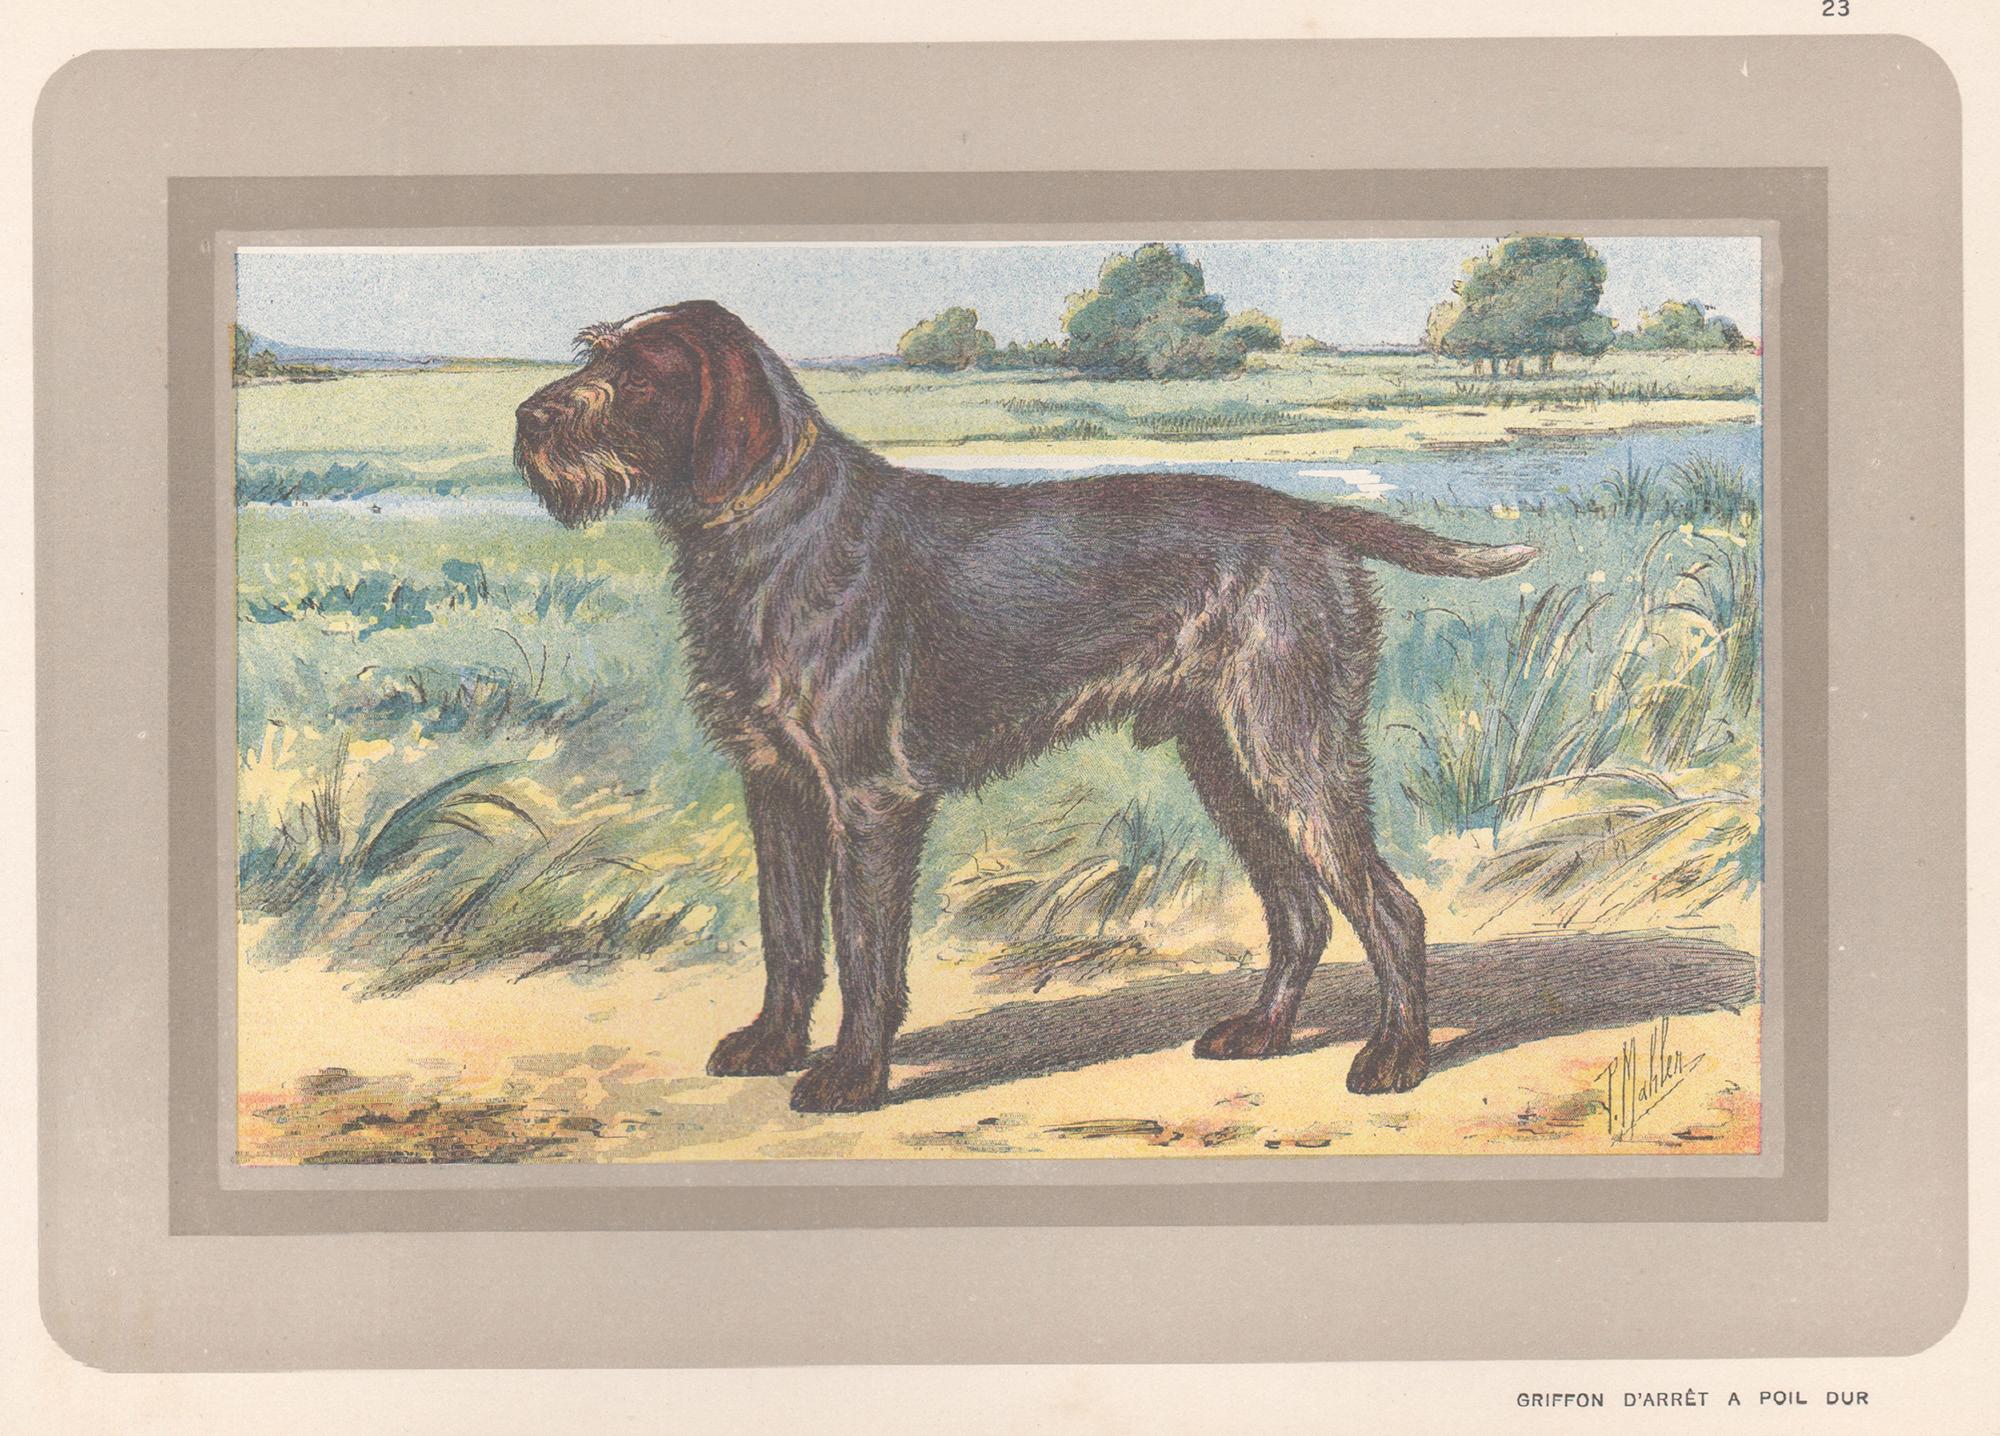 P. Mahler Animal Print - Griffon D' Arret A Poil Dur, French hound dog chromolithograph print, 1931